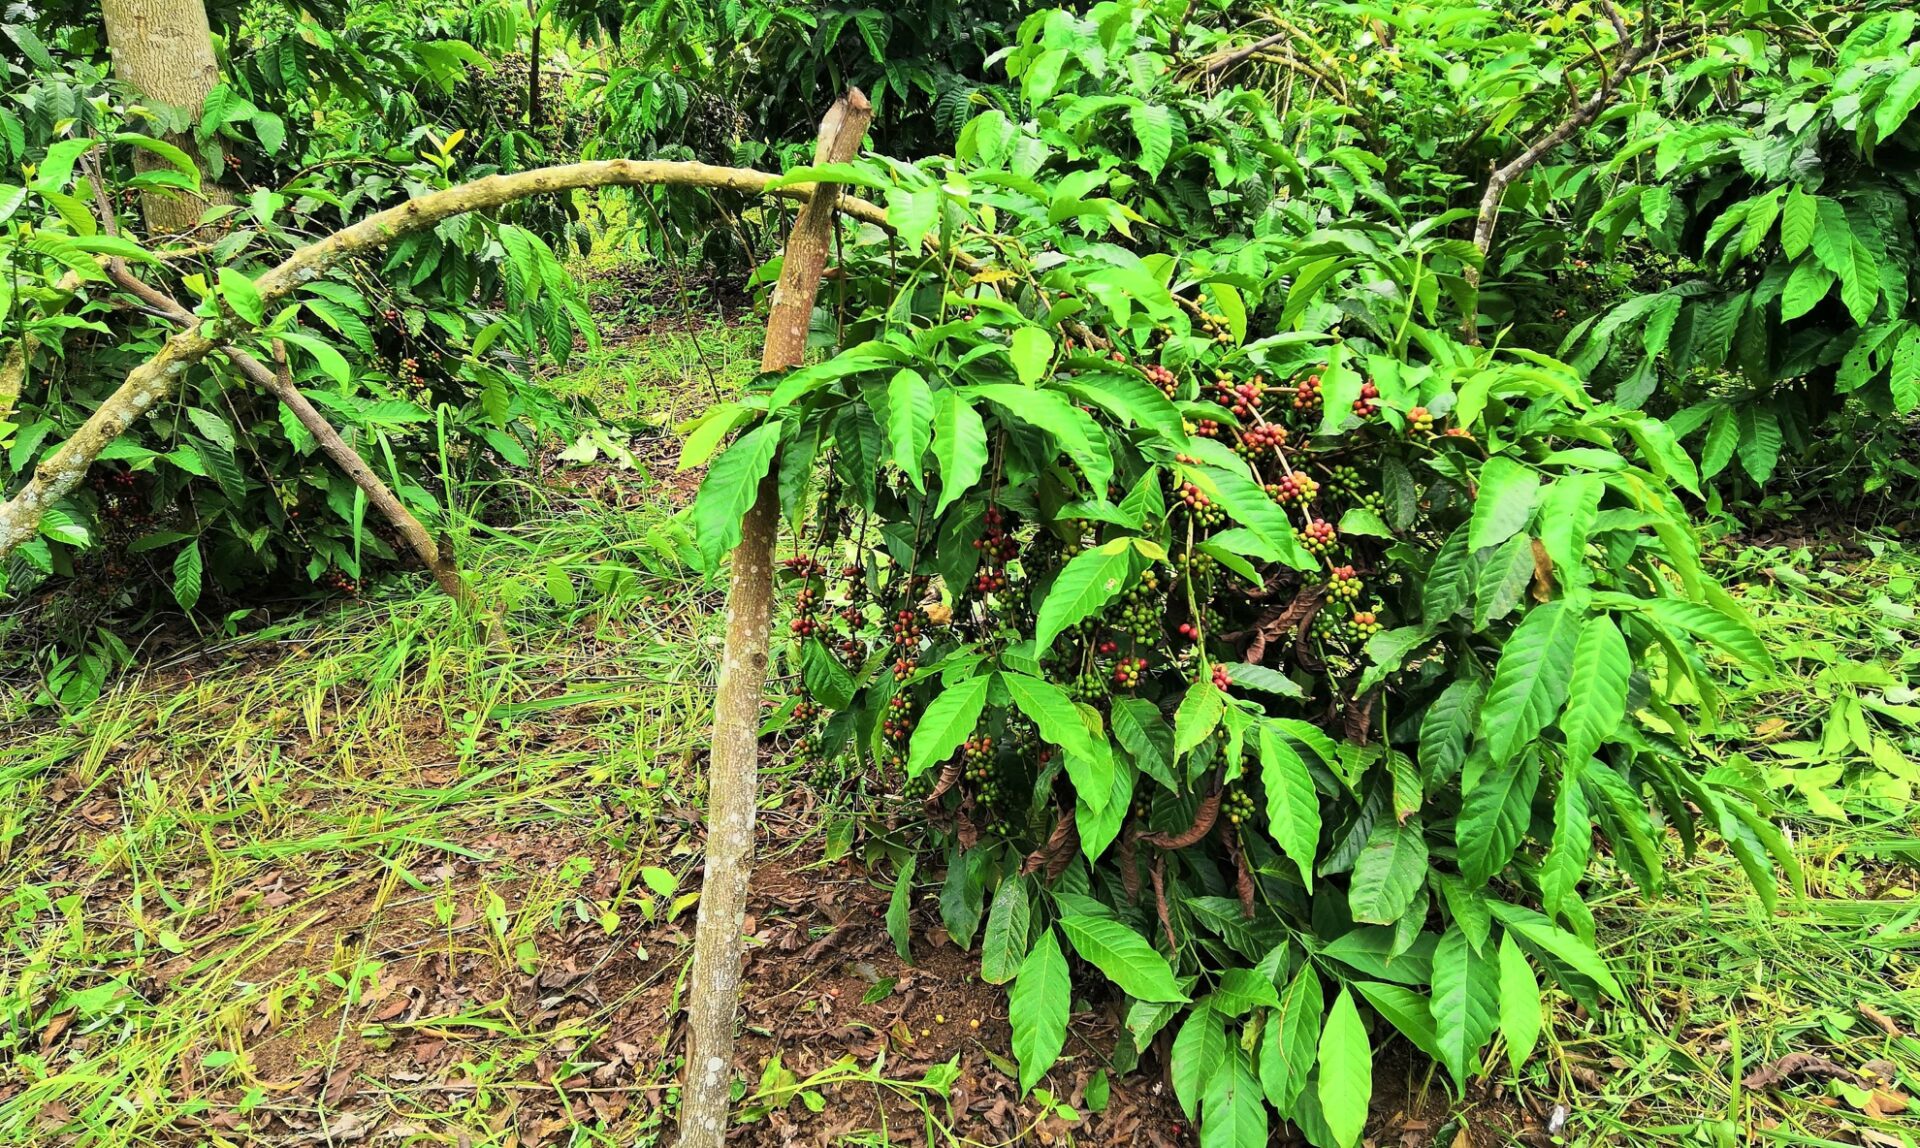 Laterite IFPRI Uganda Coffee Agronomy Training program yield study